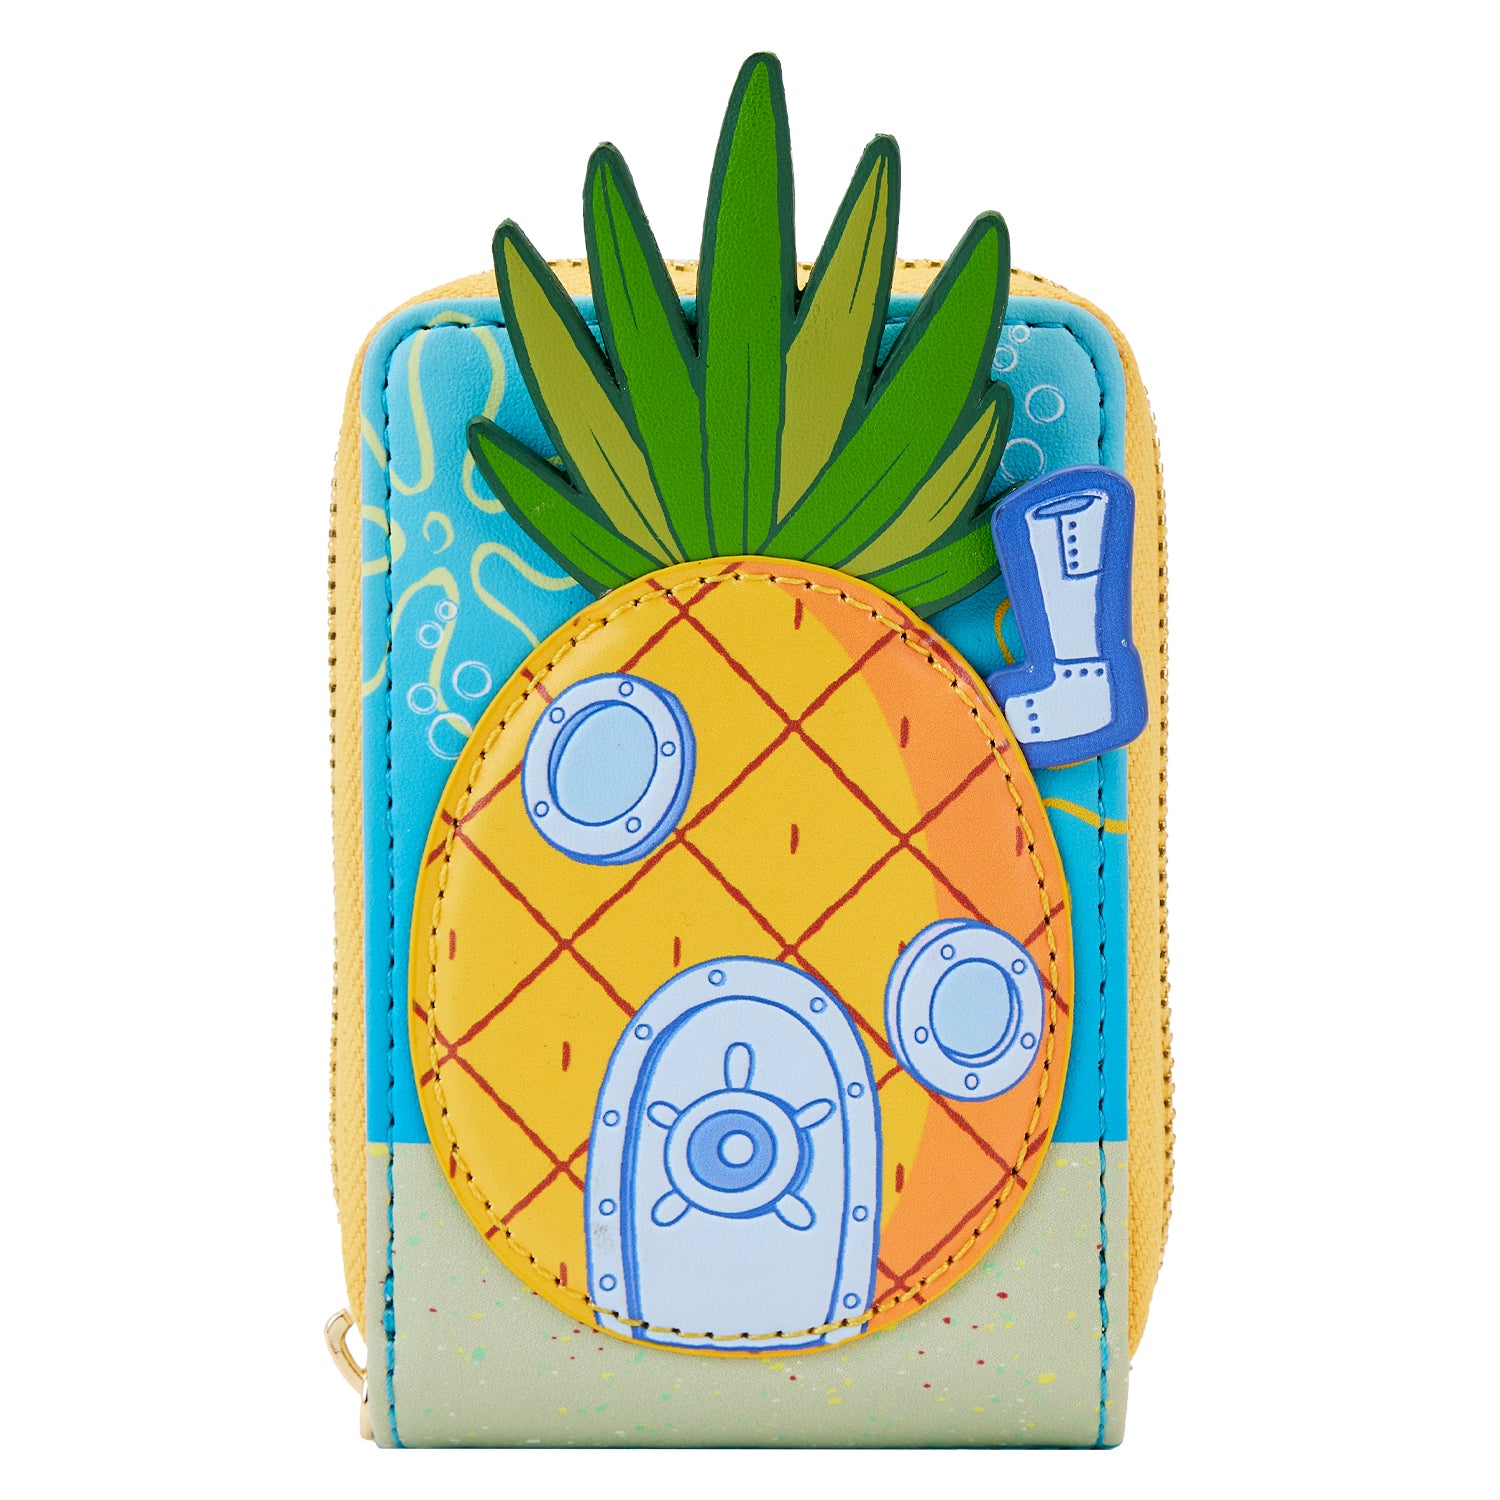 Nickelodeon | Spongebob Squarepants Pineapple House Accordion Wallet